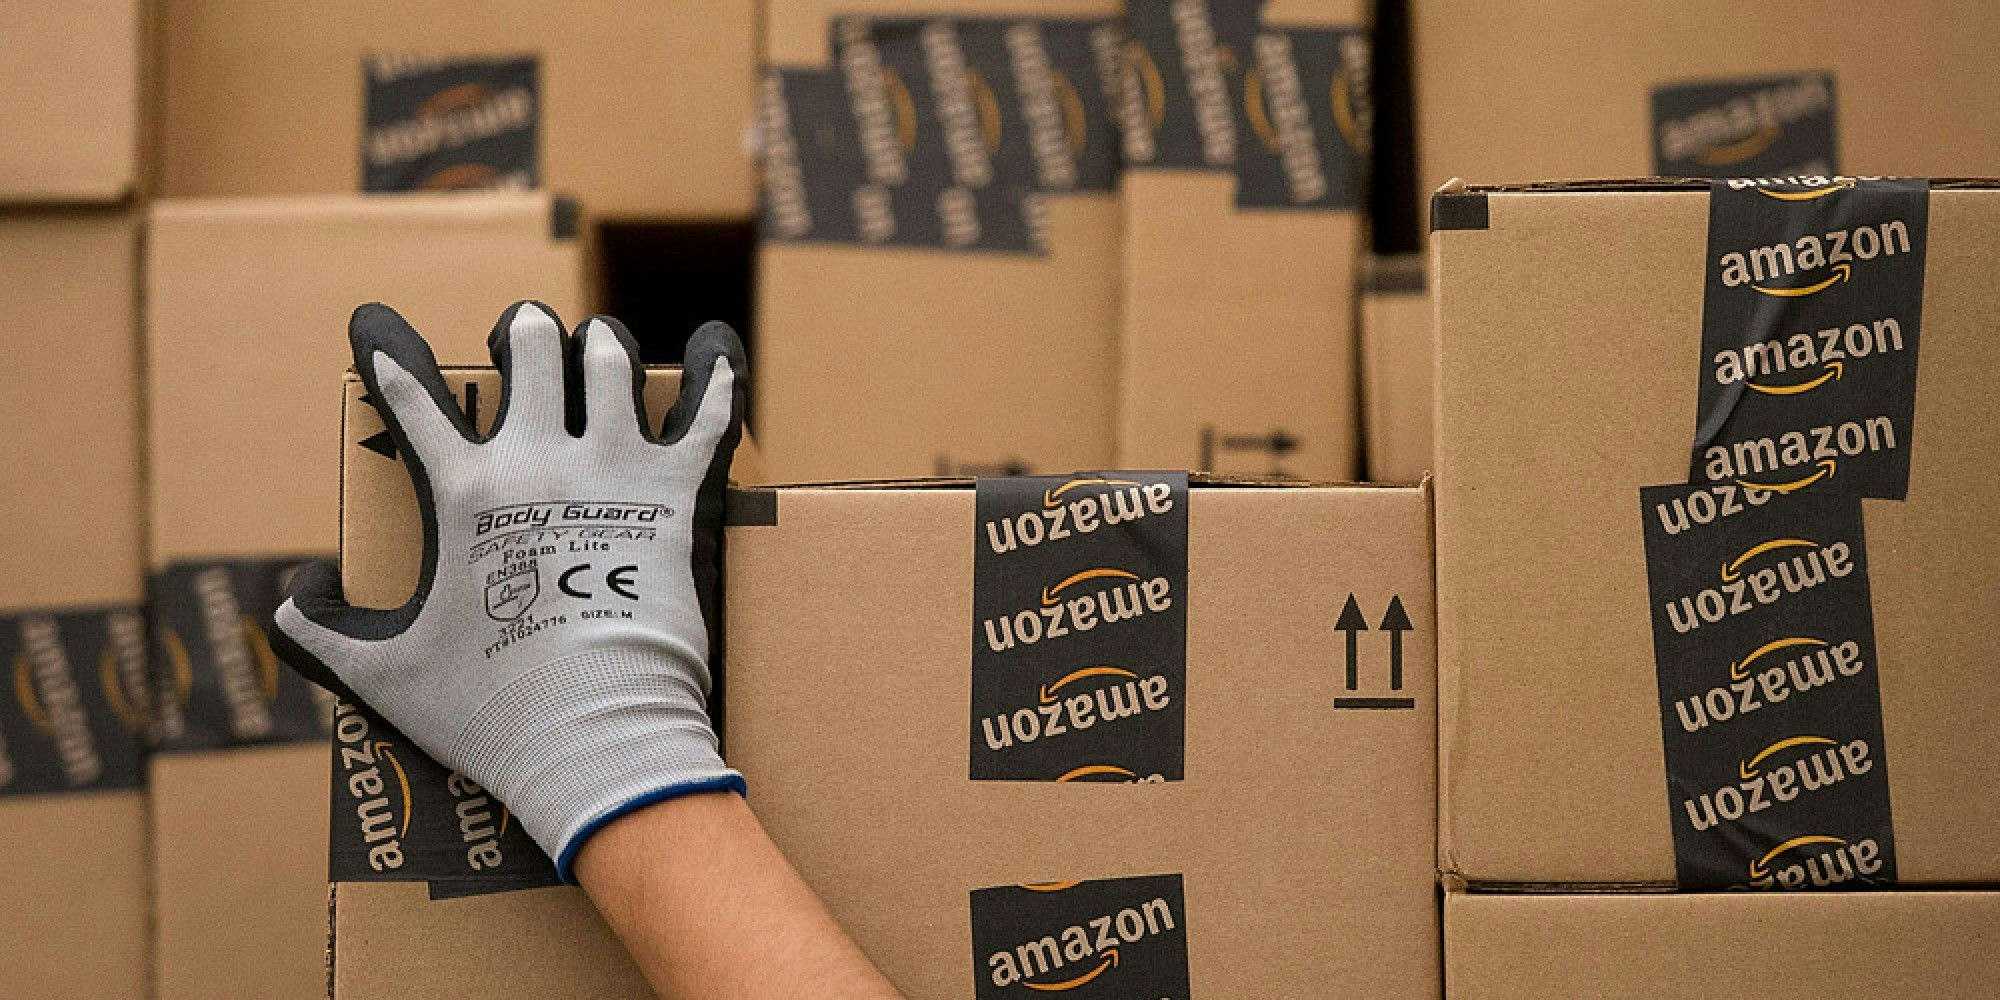 Amazon – The World’s Most Disruptive Company